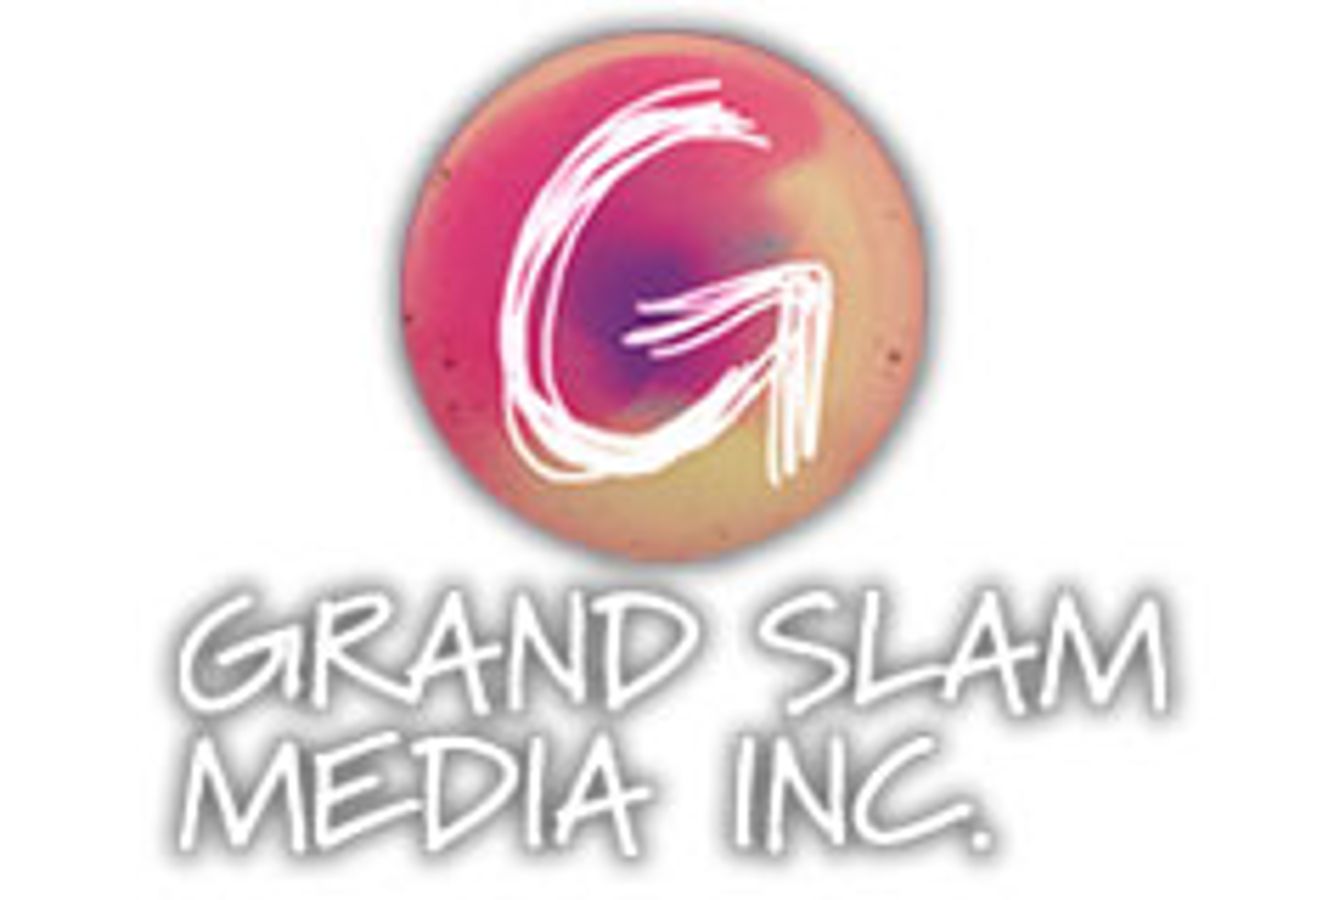 Grand Slam Media